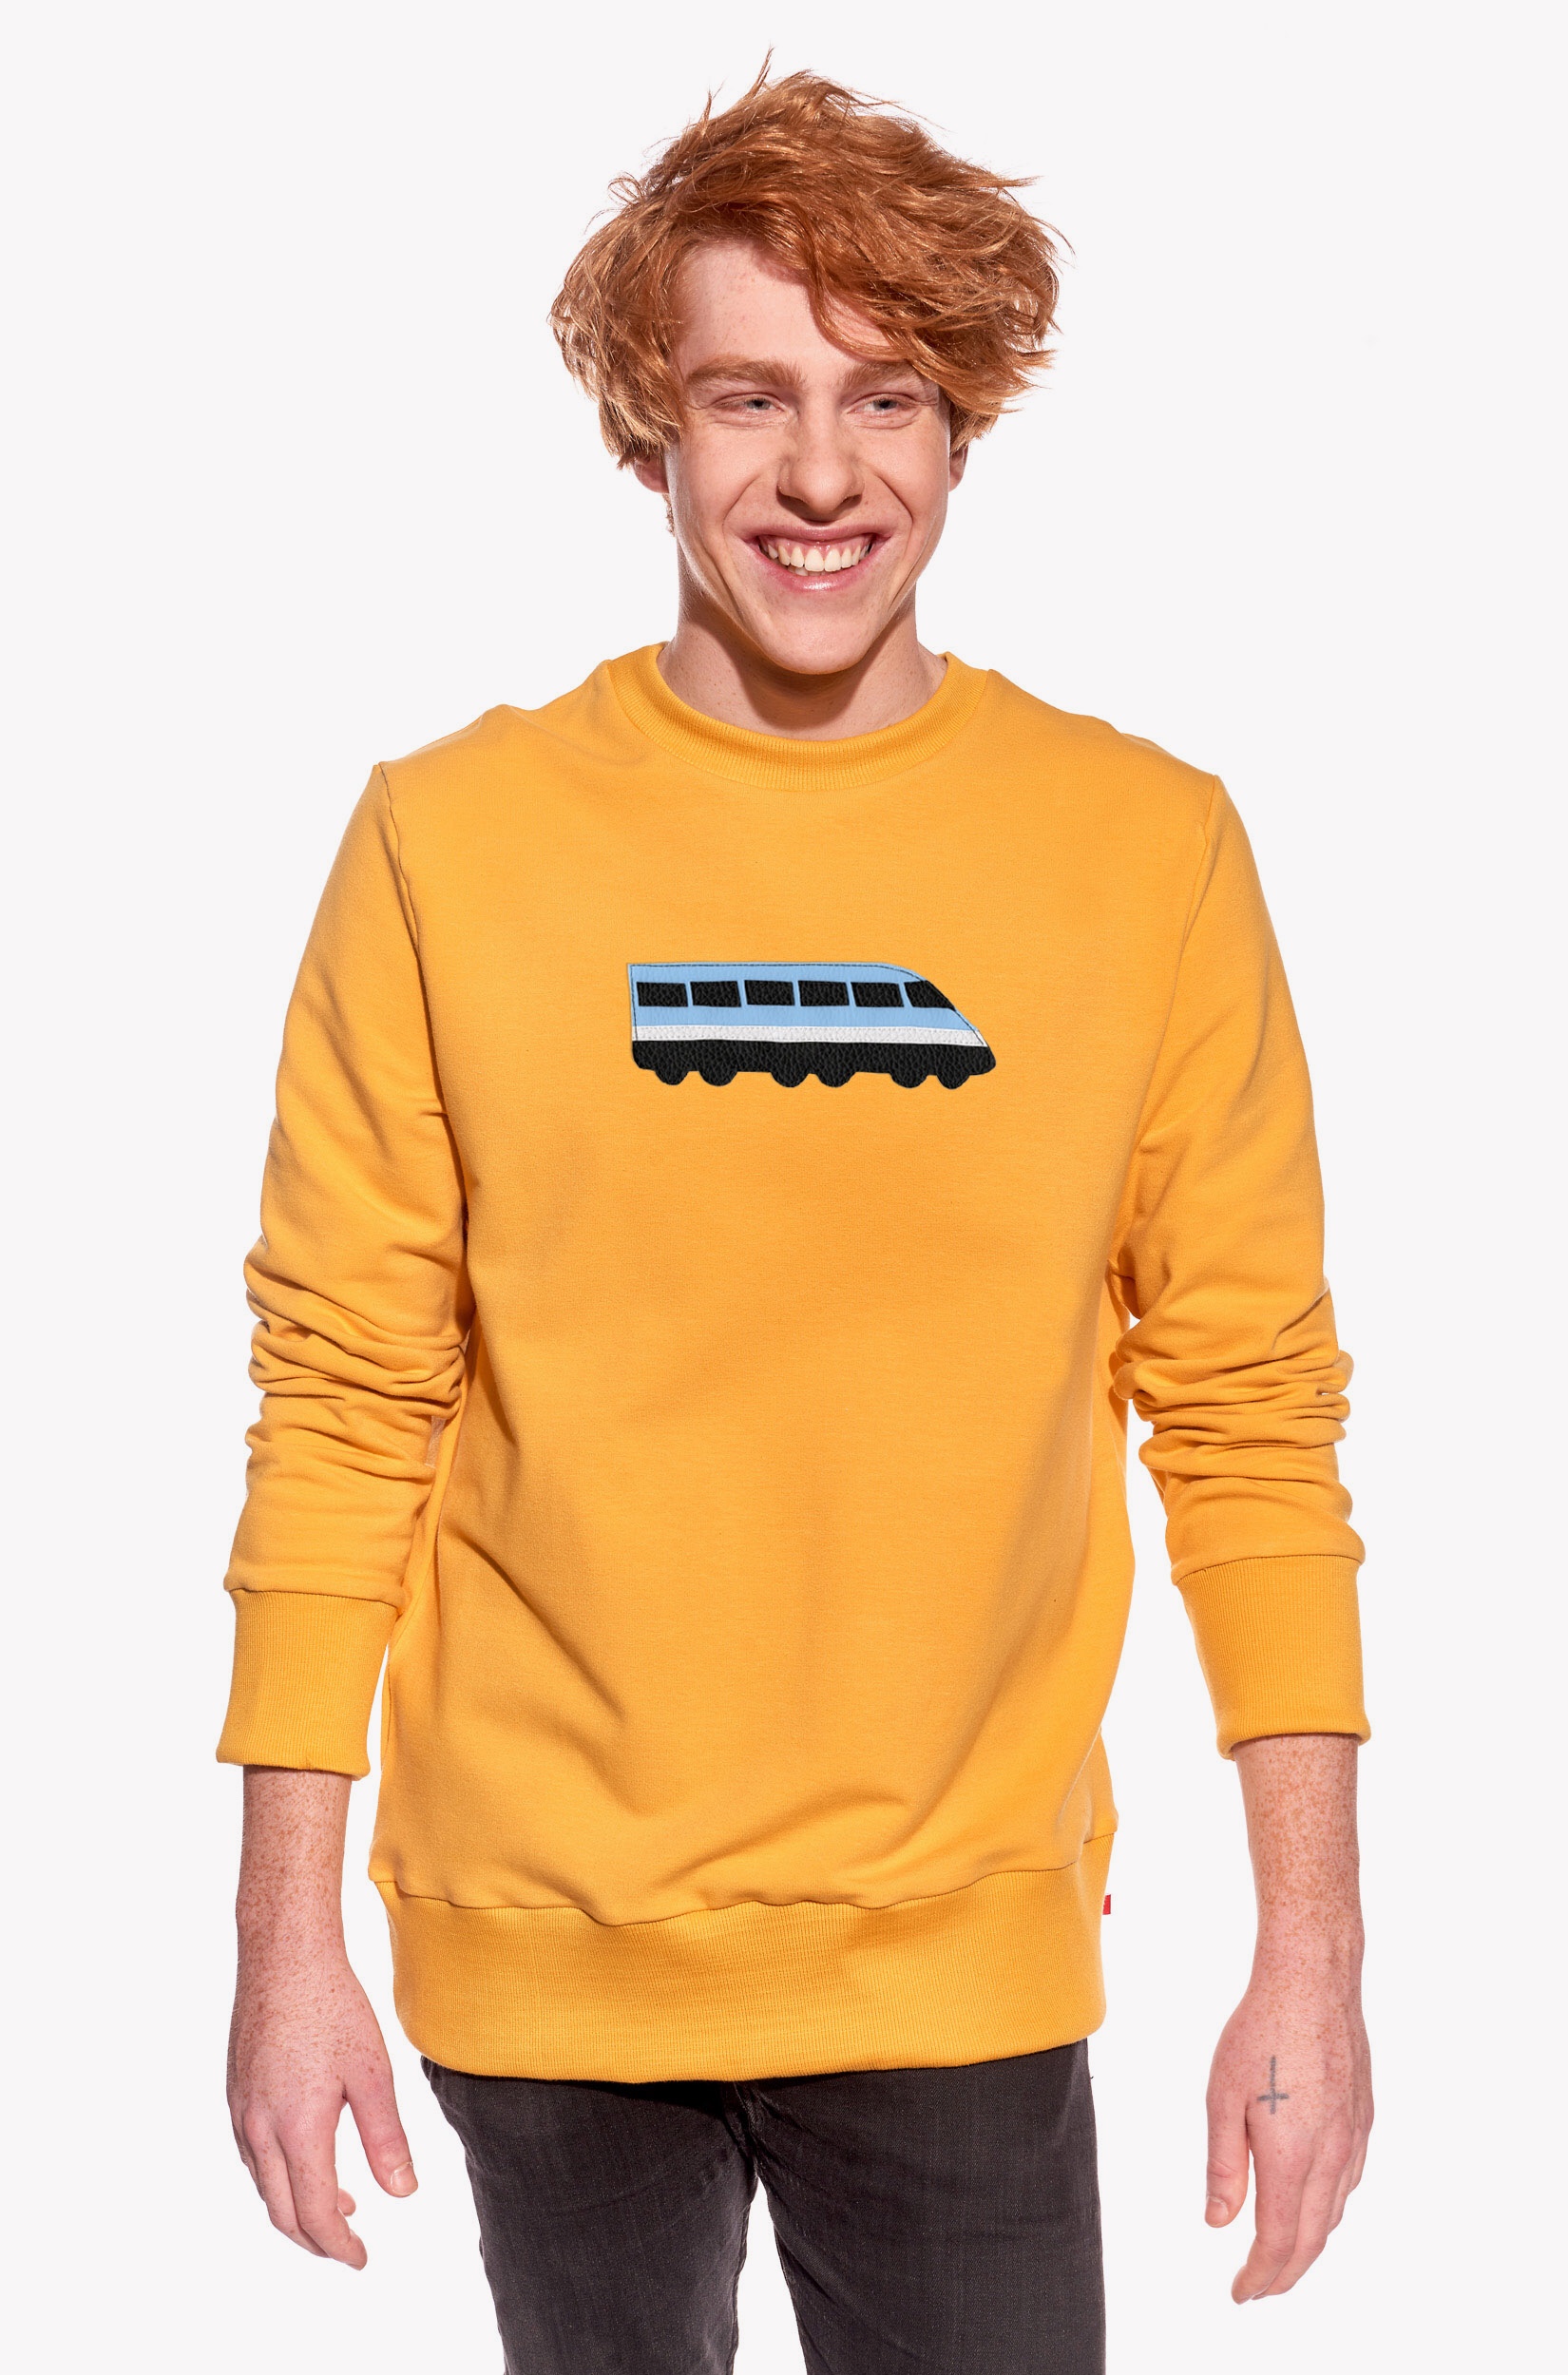 Hoodie with train